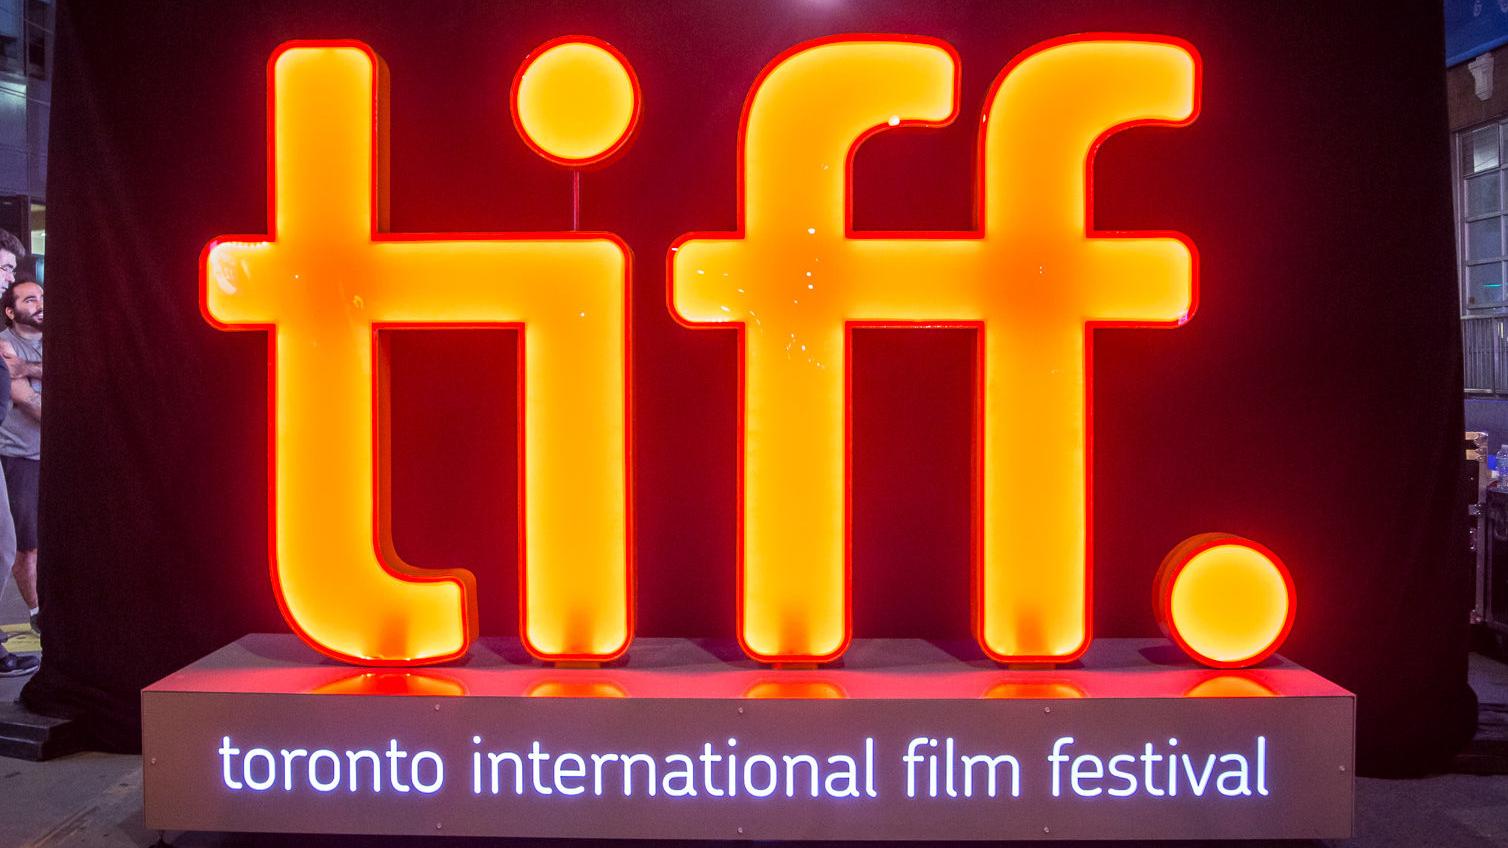 Toronto International Film Festival announces 2022 award winners. #TIFF22